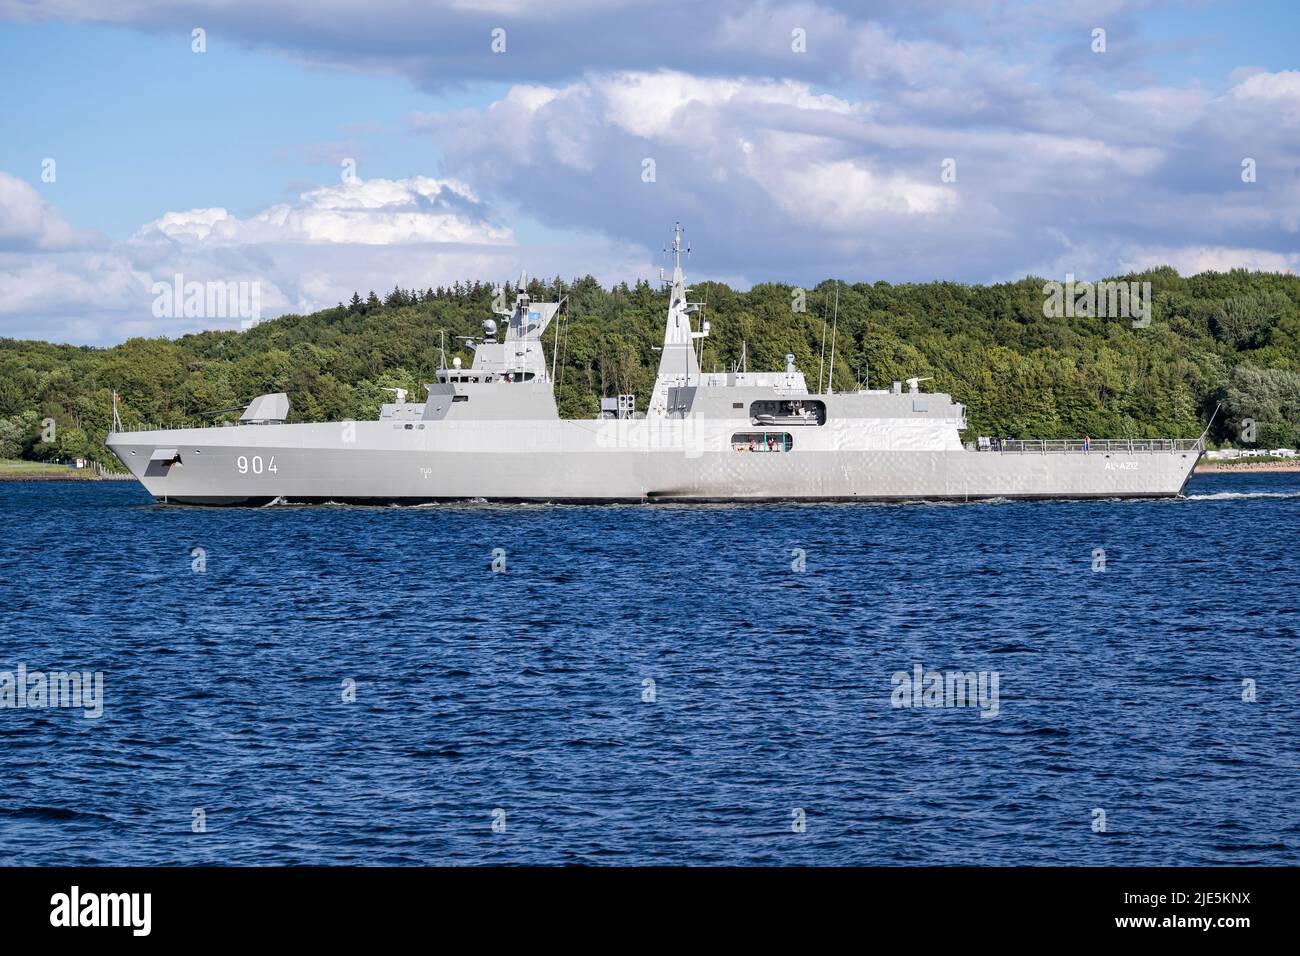 new build Meko 200 type frigate AL-AZIZ 904 for the Egyptian Navy on sea trial in the Kiel Fjord Stock Photo